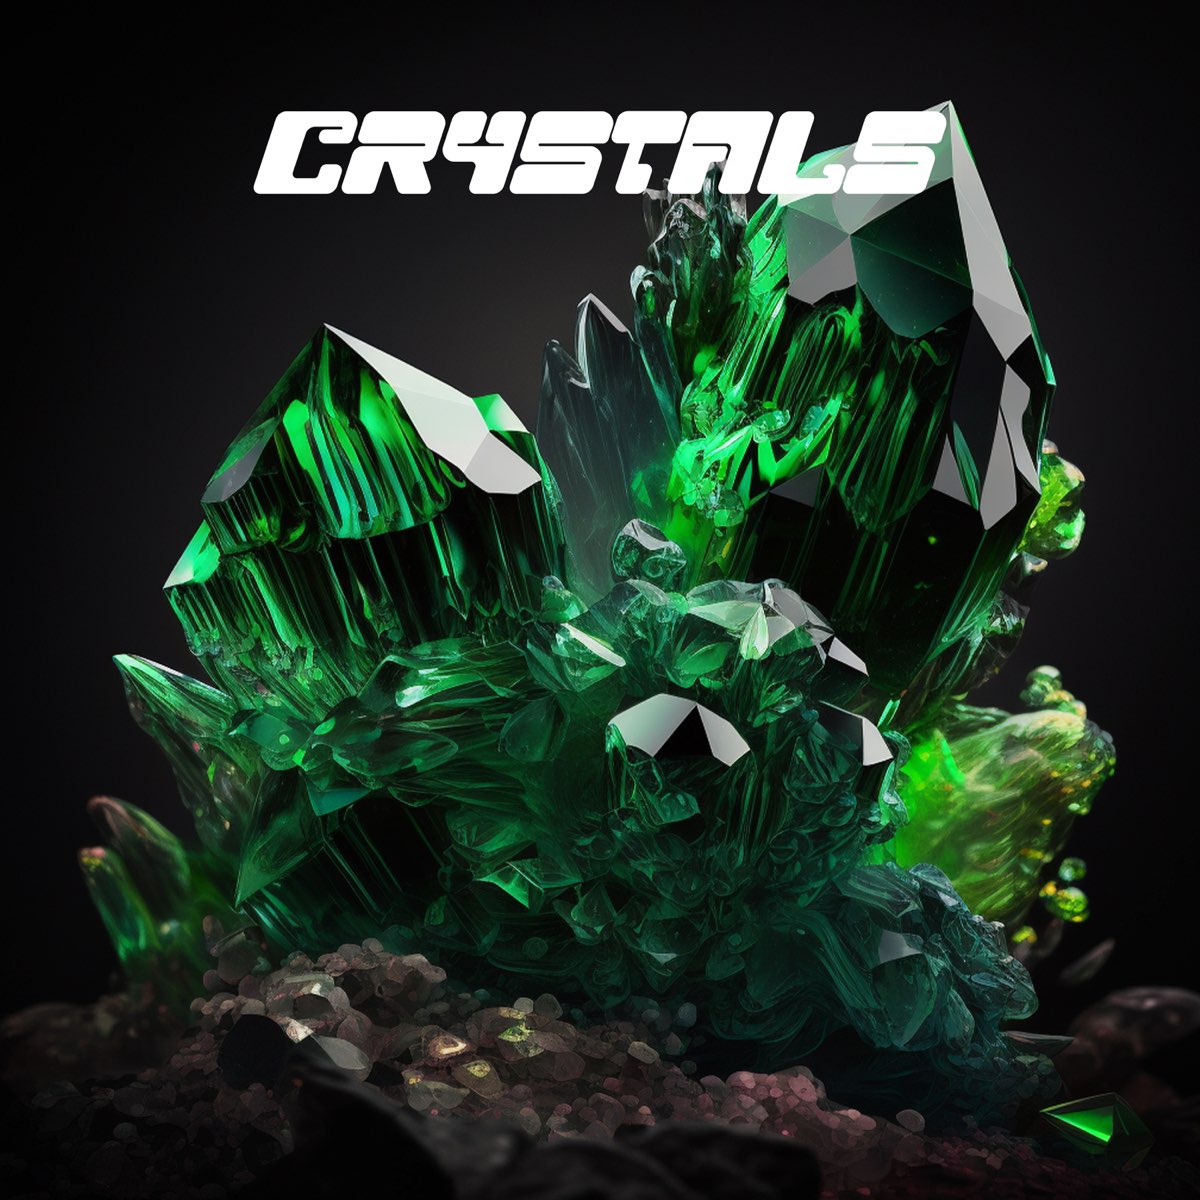 Crystals pr1svx. Crystals (Slowed) от pr1svx. Песня Crystals Slowed pr1svx. Crystals pr1isvx обложка.